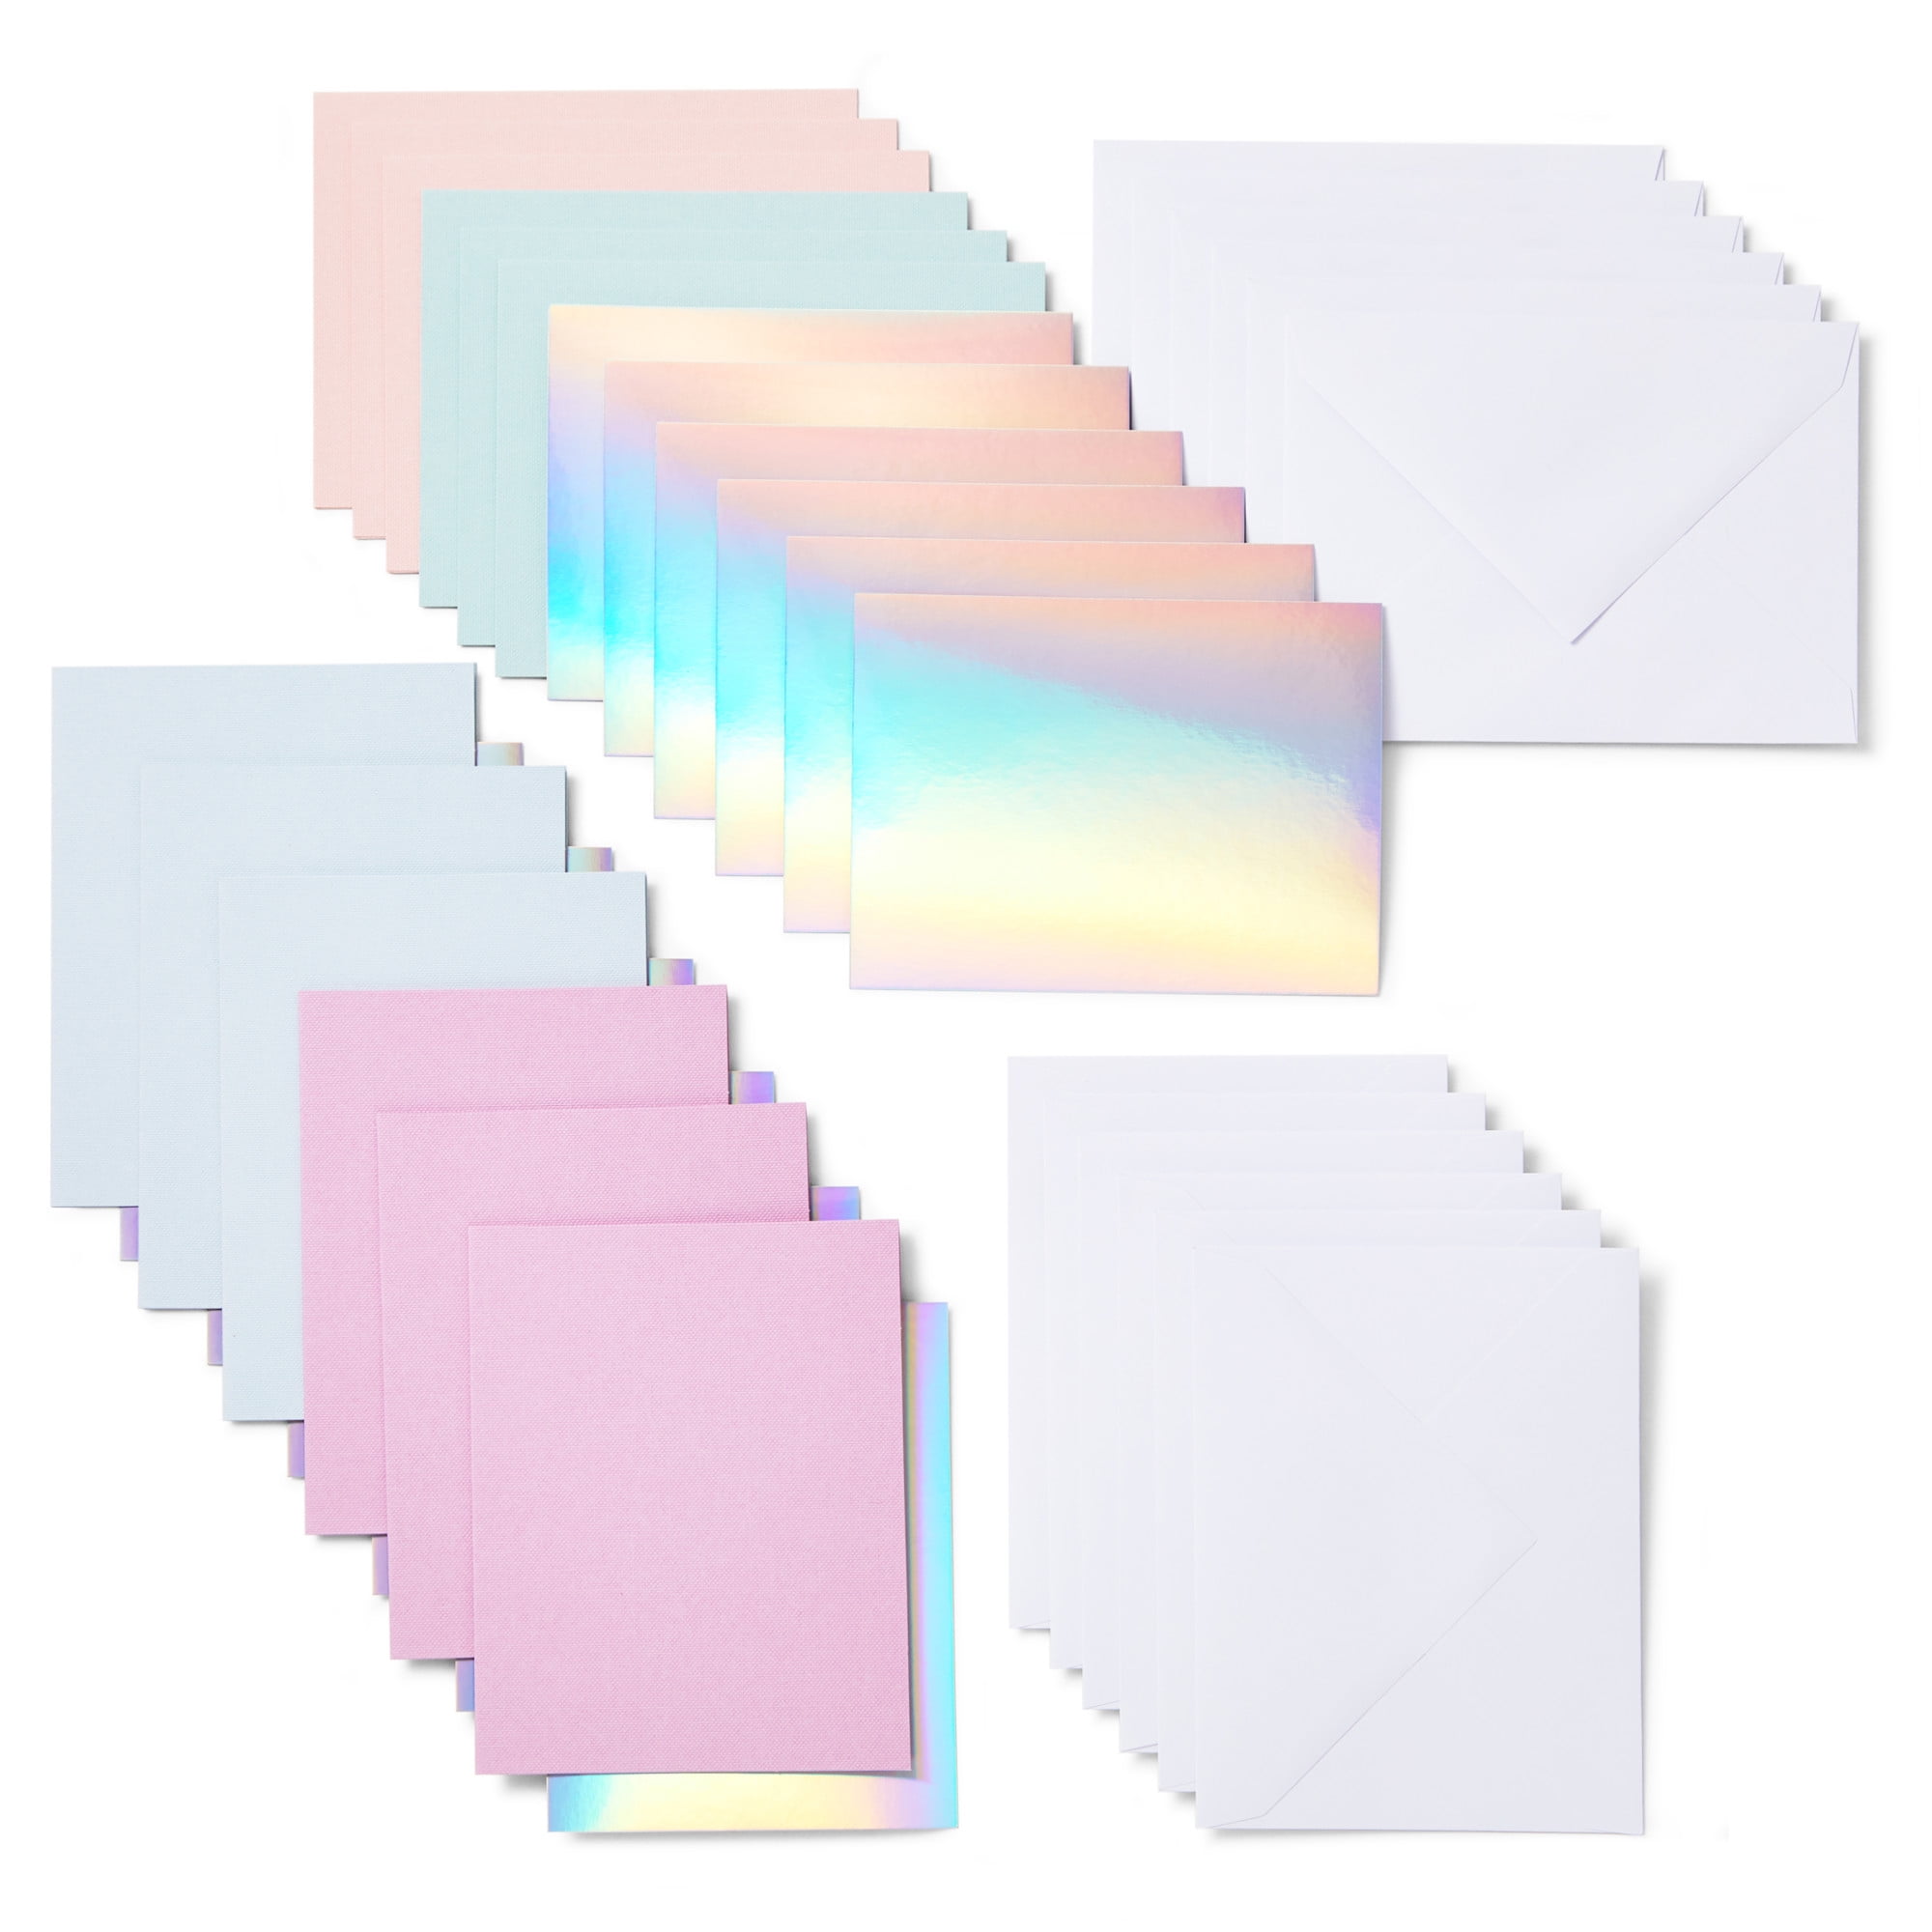 Cricut Joy Insert Cards-Matte Silver Lining Sampler - 093573557248